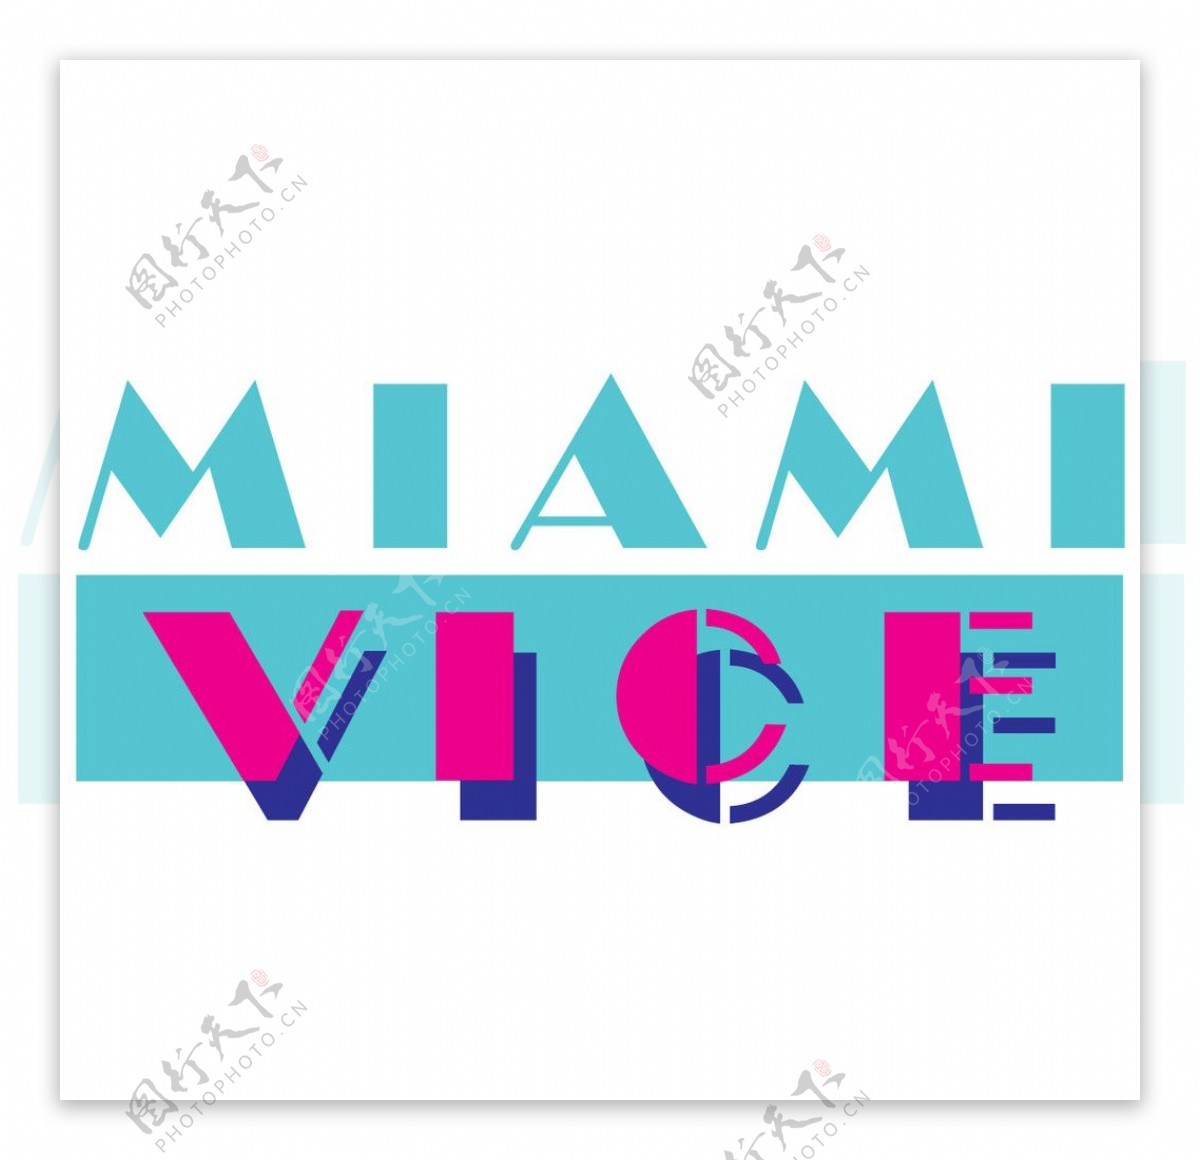 MiamiVice标志图片